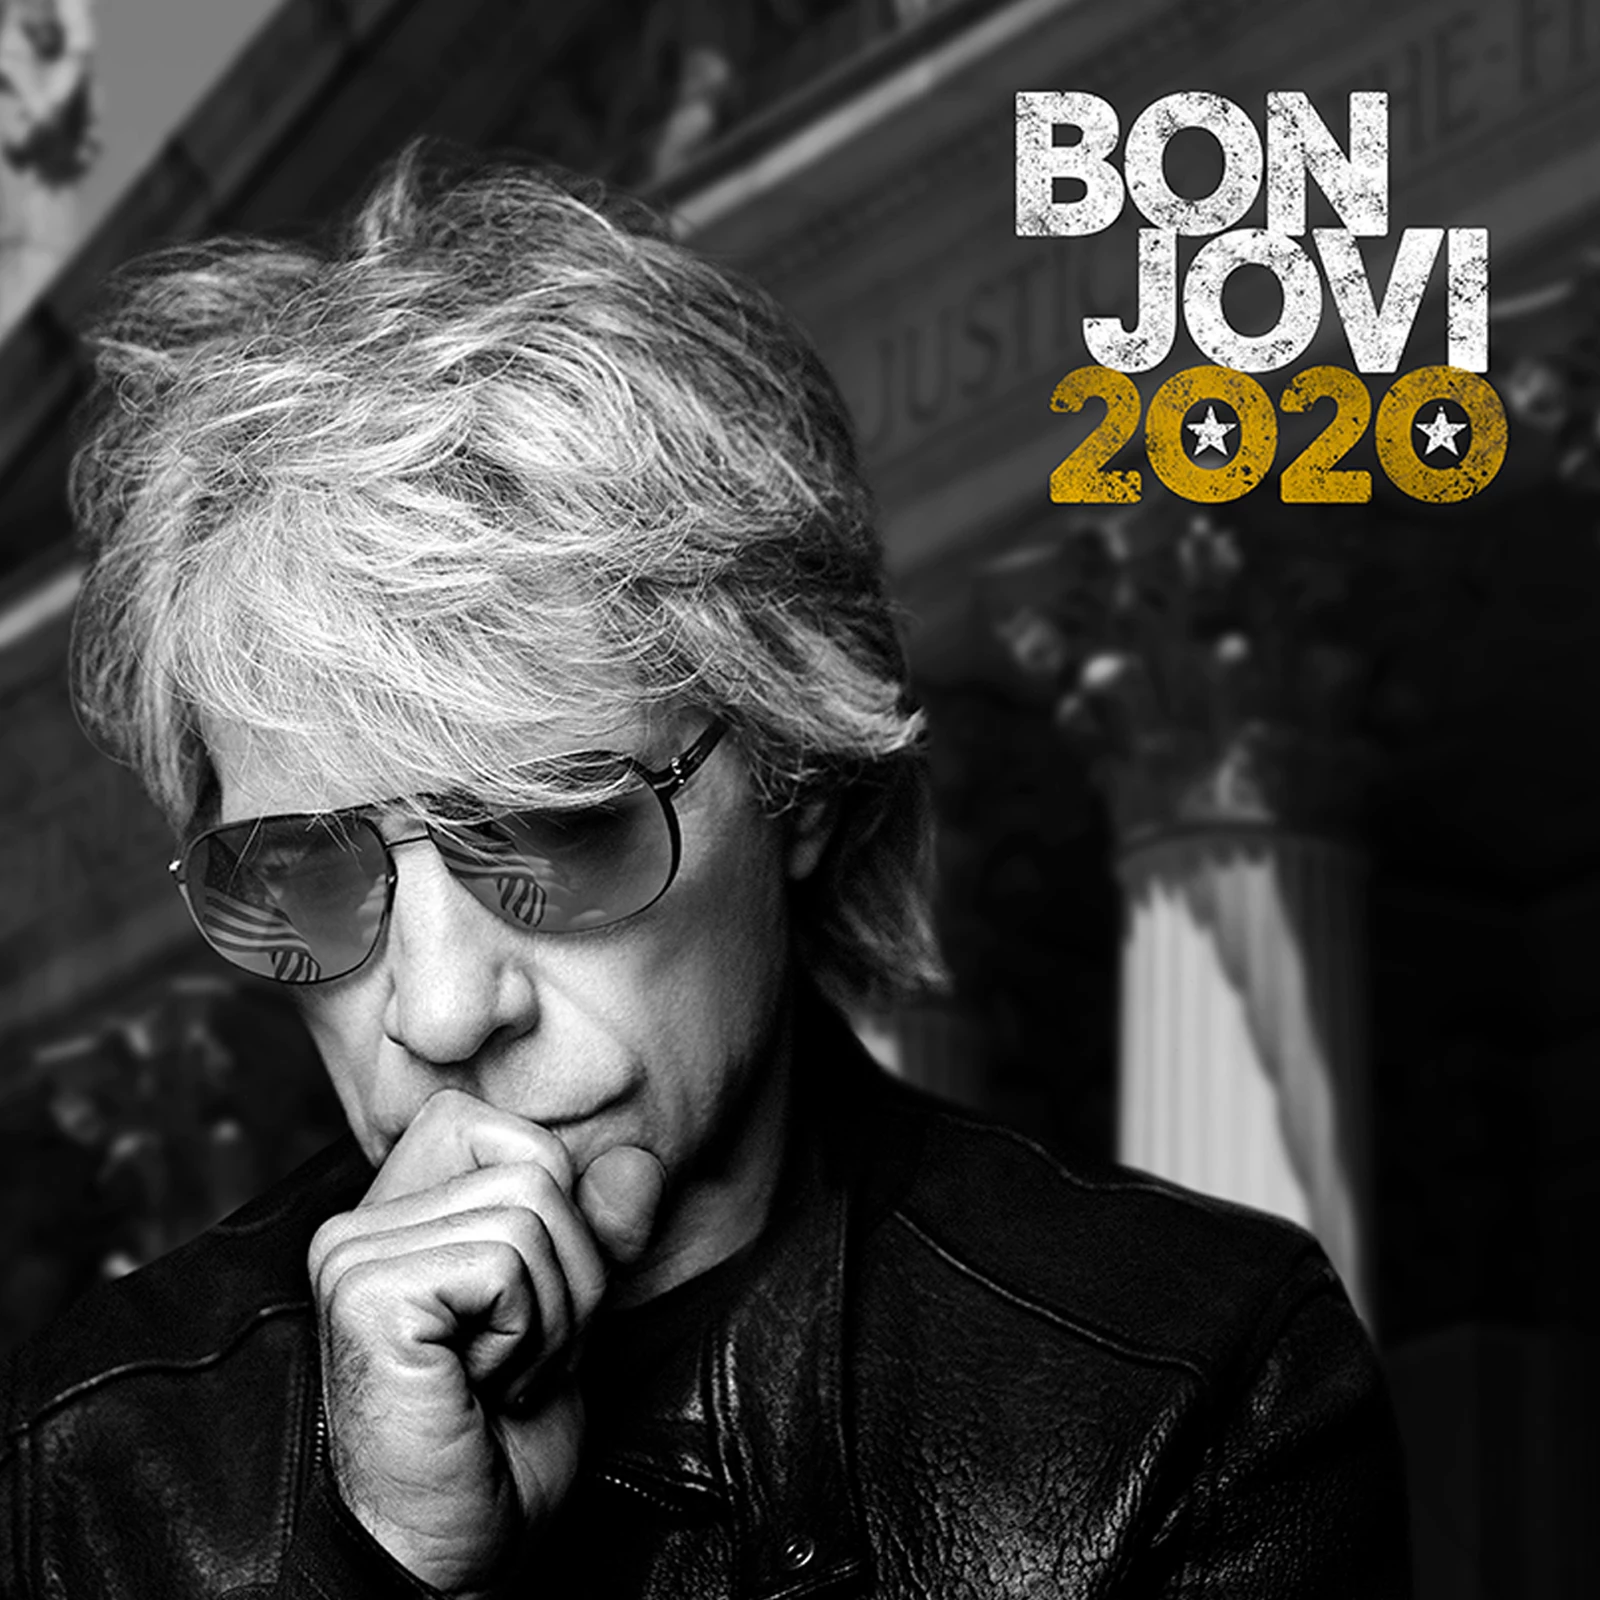 images of bon jovi album covers